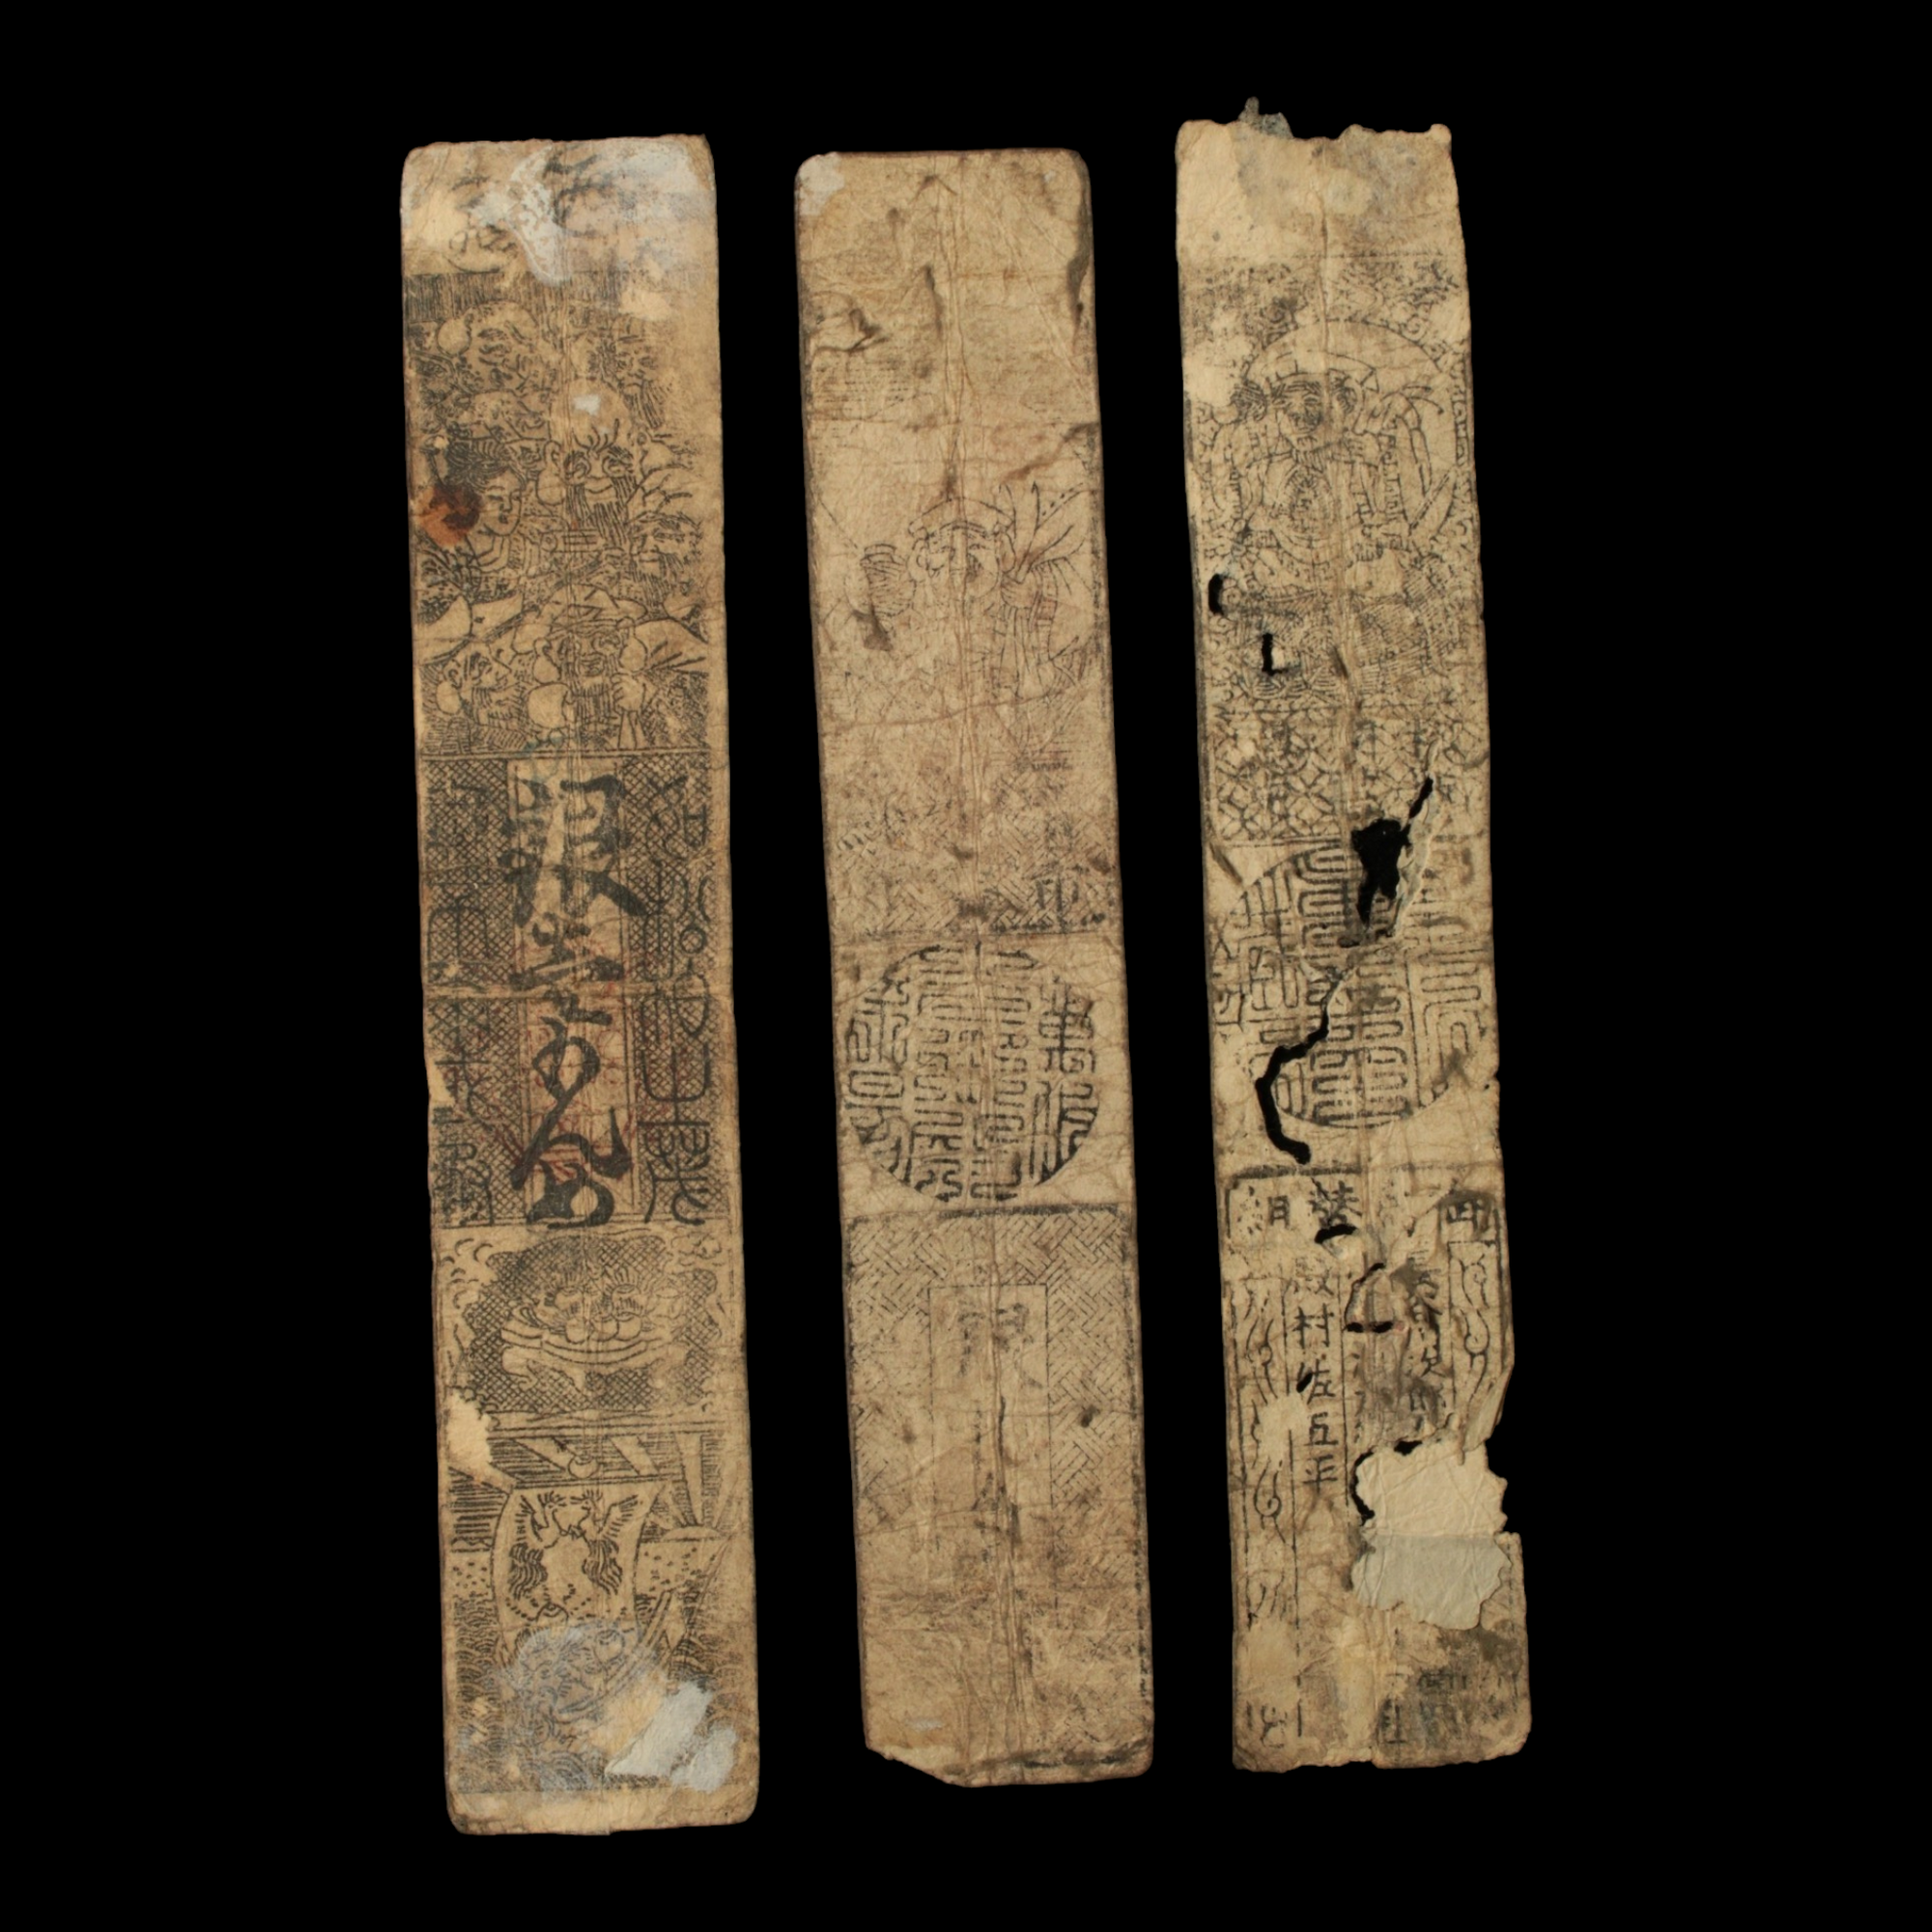 Lot of 3 Hansatsu, Paper Money - c. 1750 - 1870 CE - Japan